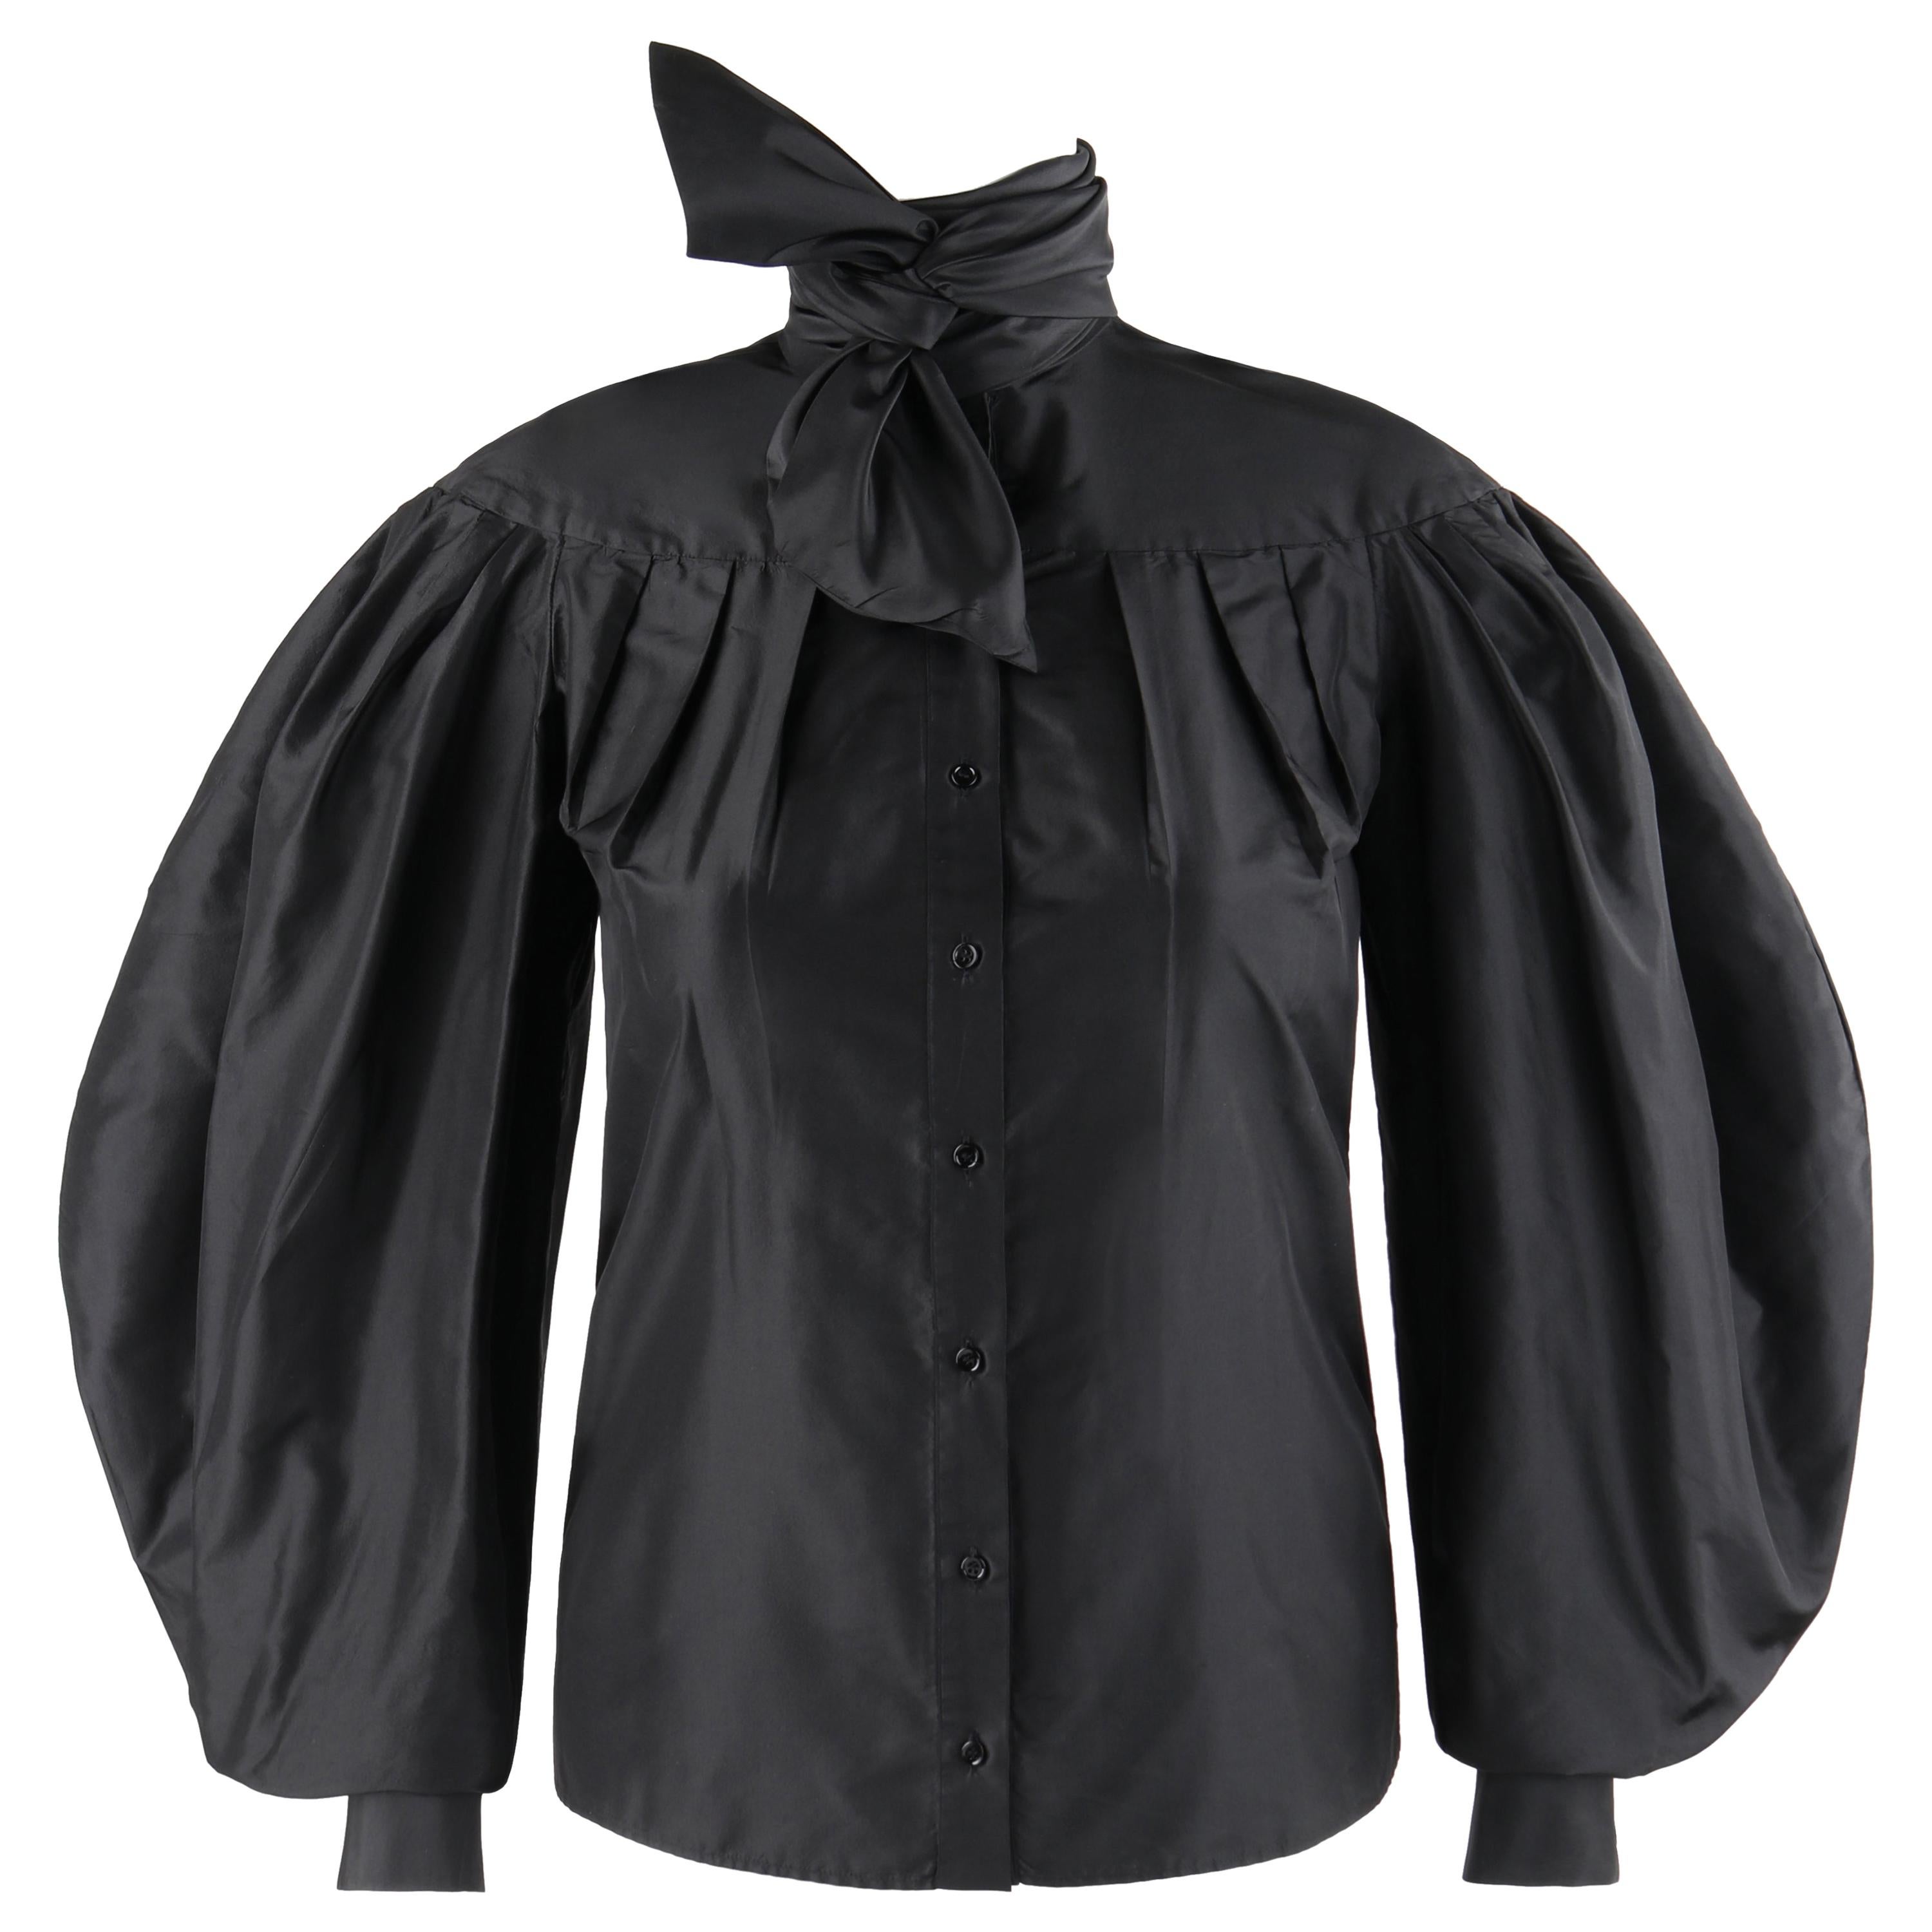 ALEXANDER McQUEEN A/W 2008 Black Silk Pleated Long Bouffant Sleeve Blouse Top